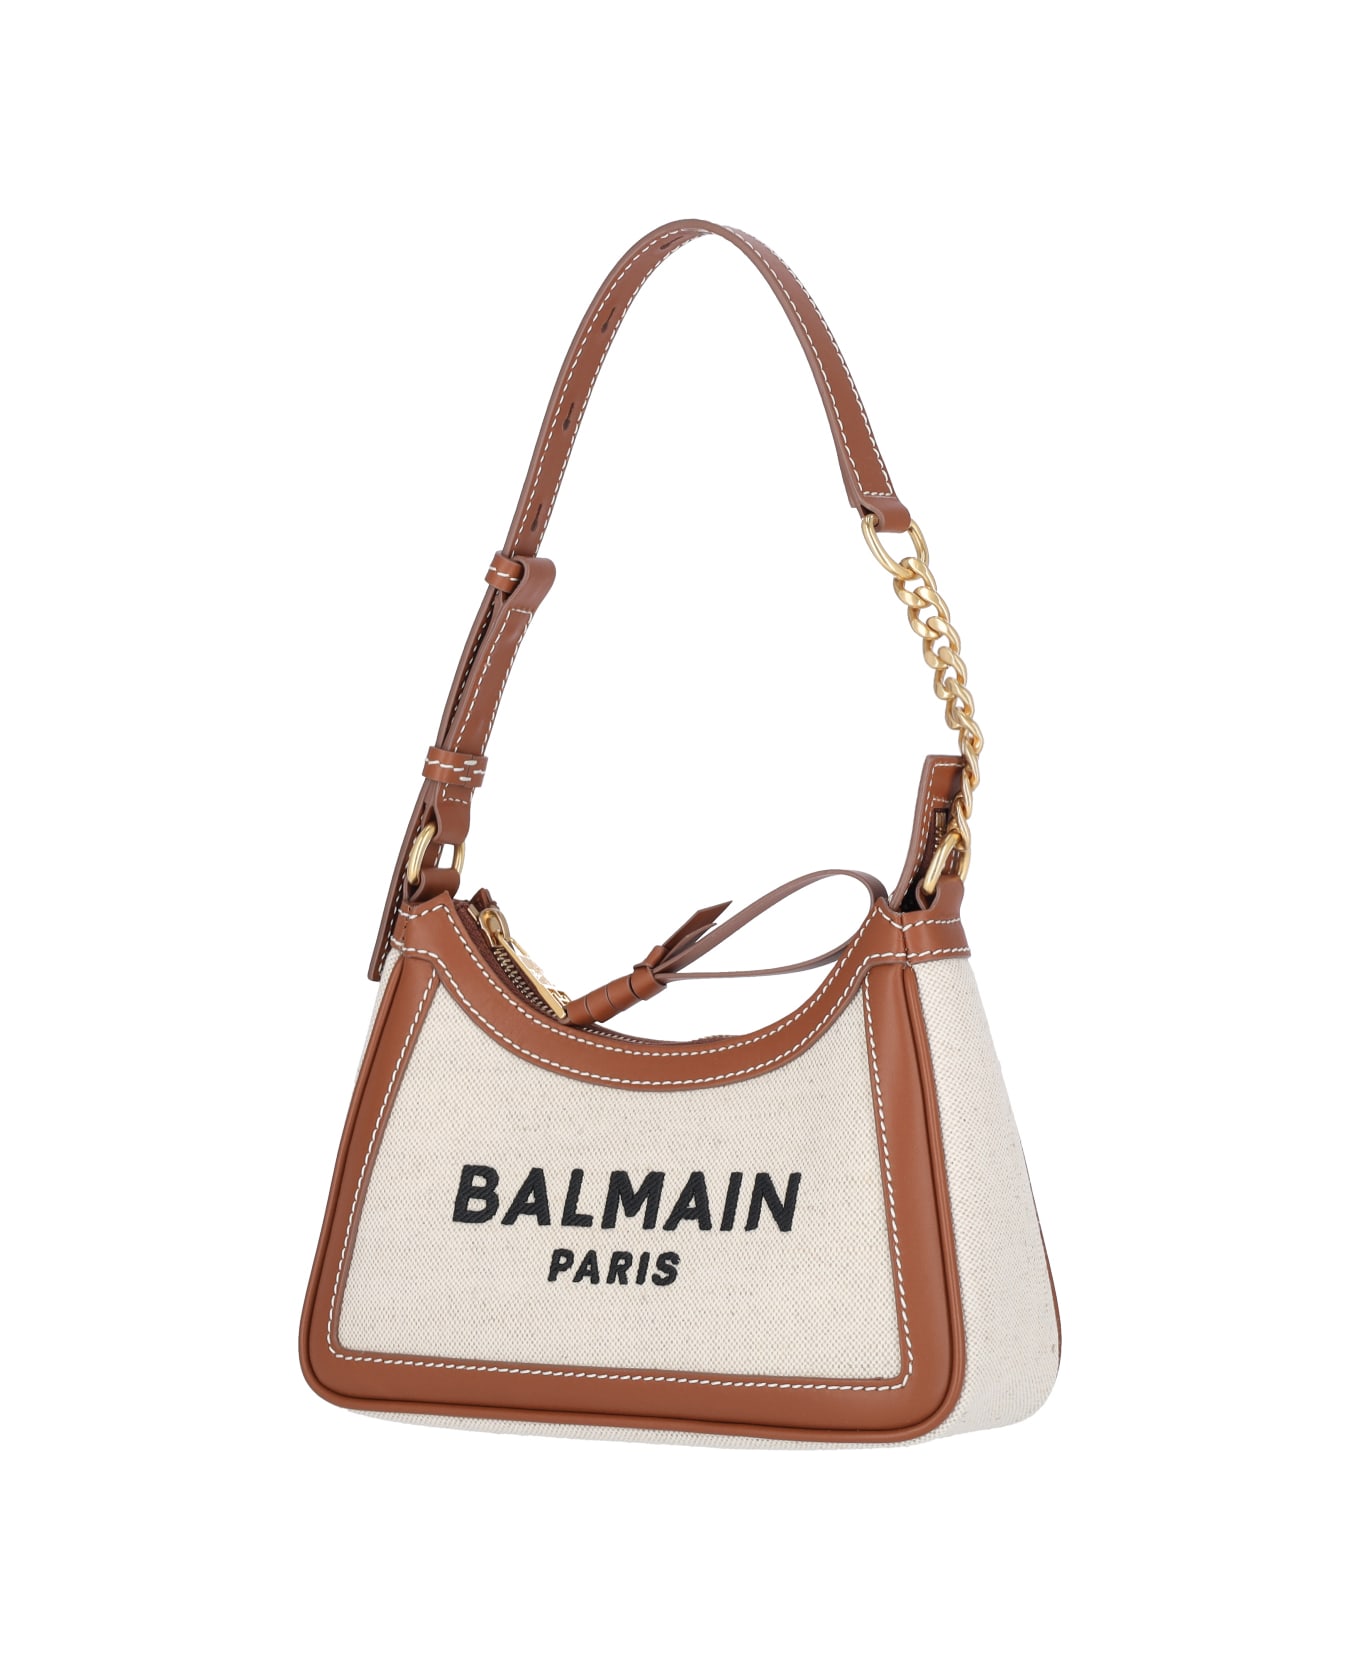 Balmain 'b-army' Shoulder Bag - Natuler/marron